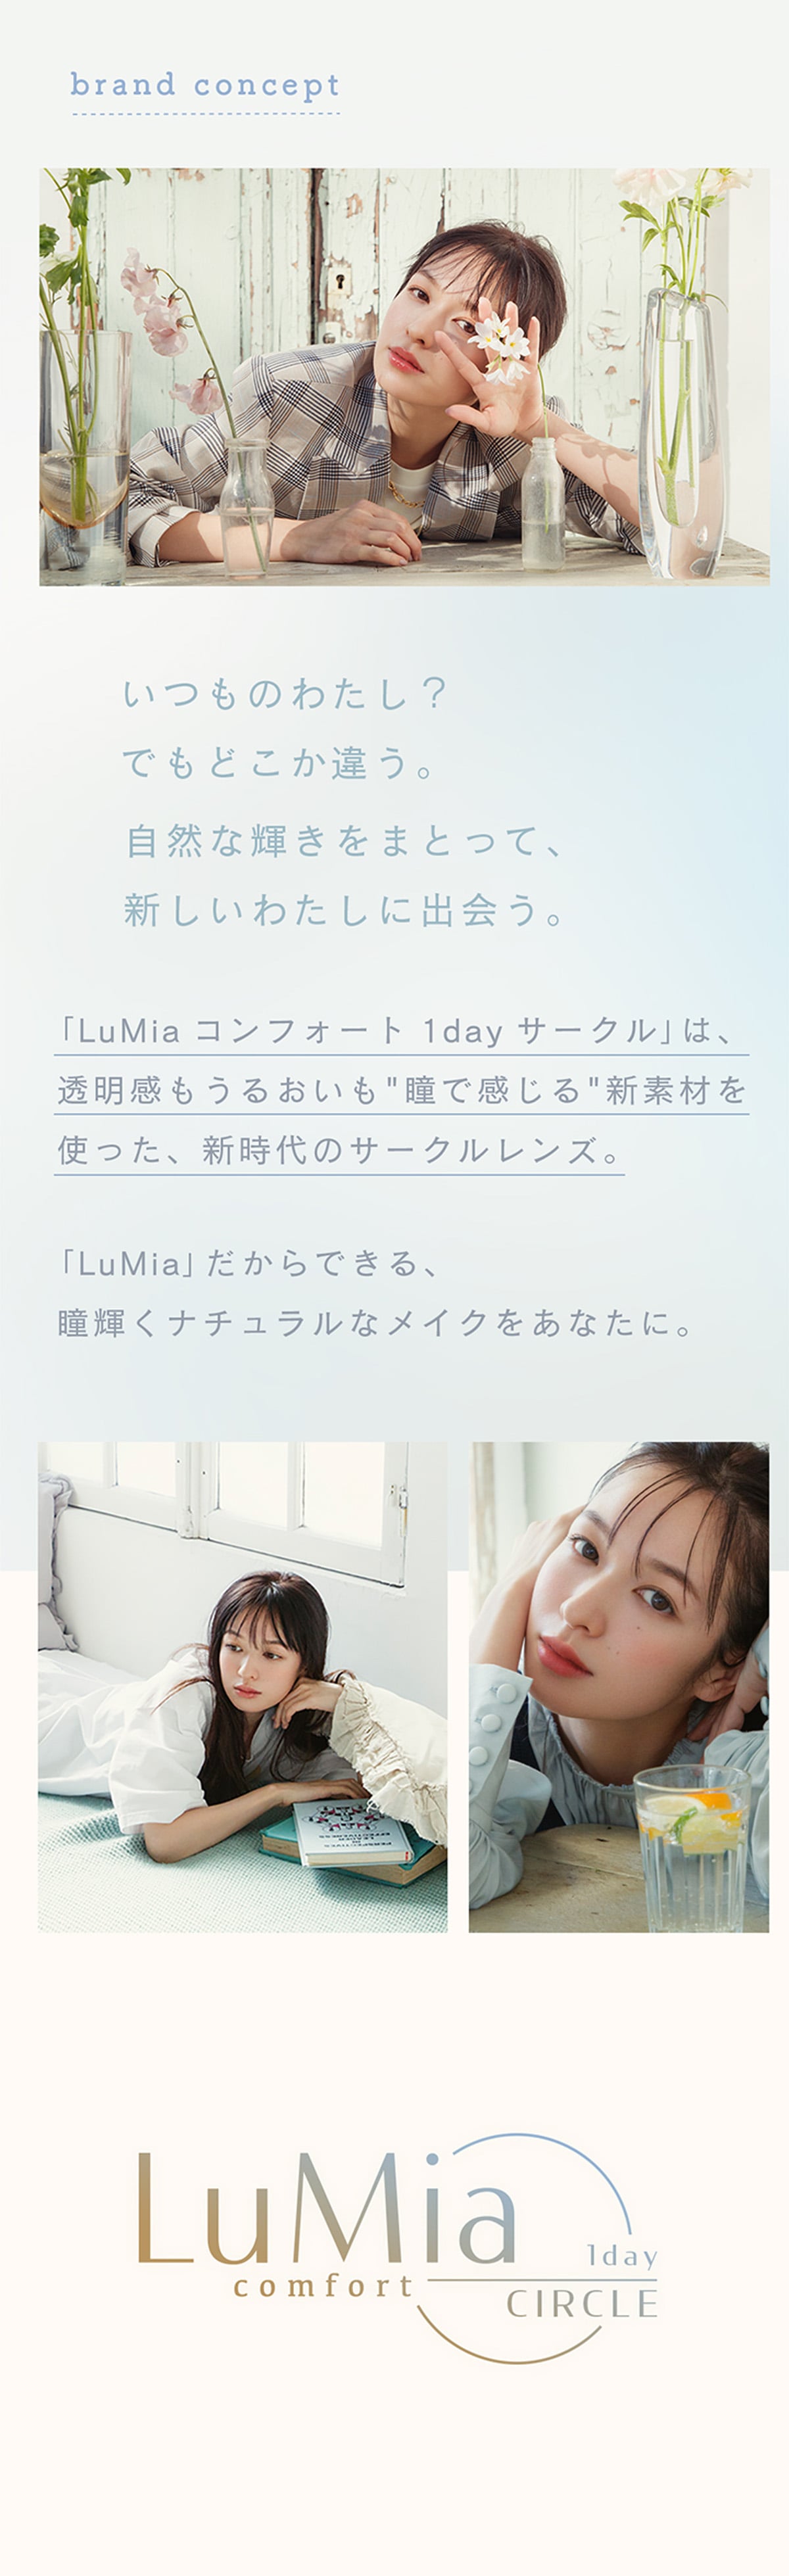 LuMia comfort 1day CIRCLE ~ARtH[gf[T[N brand concept